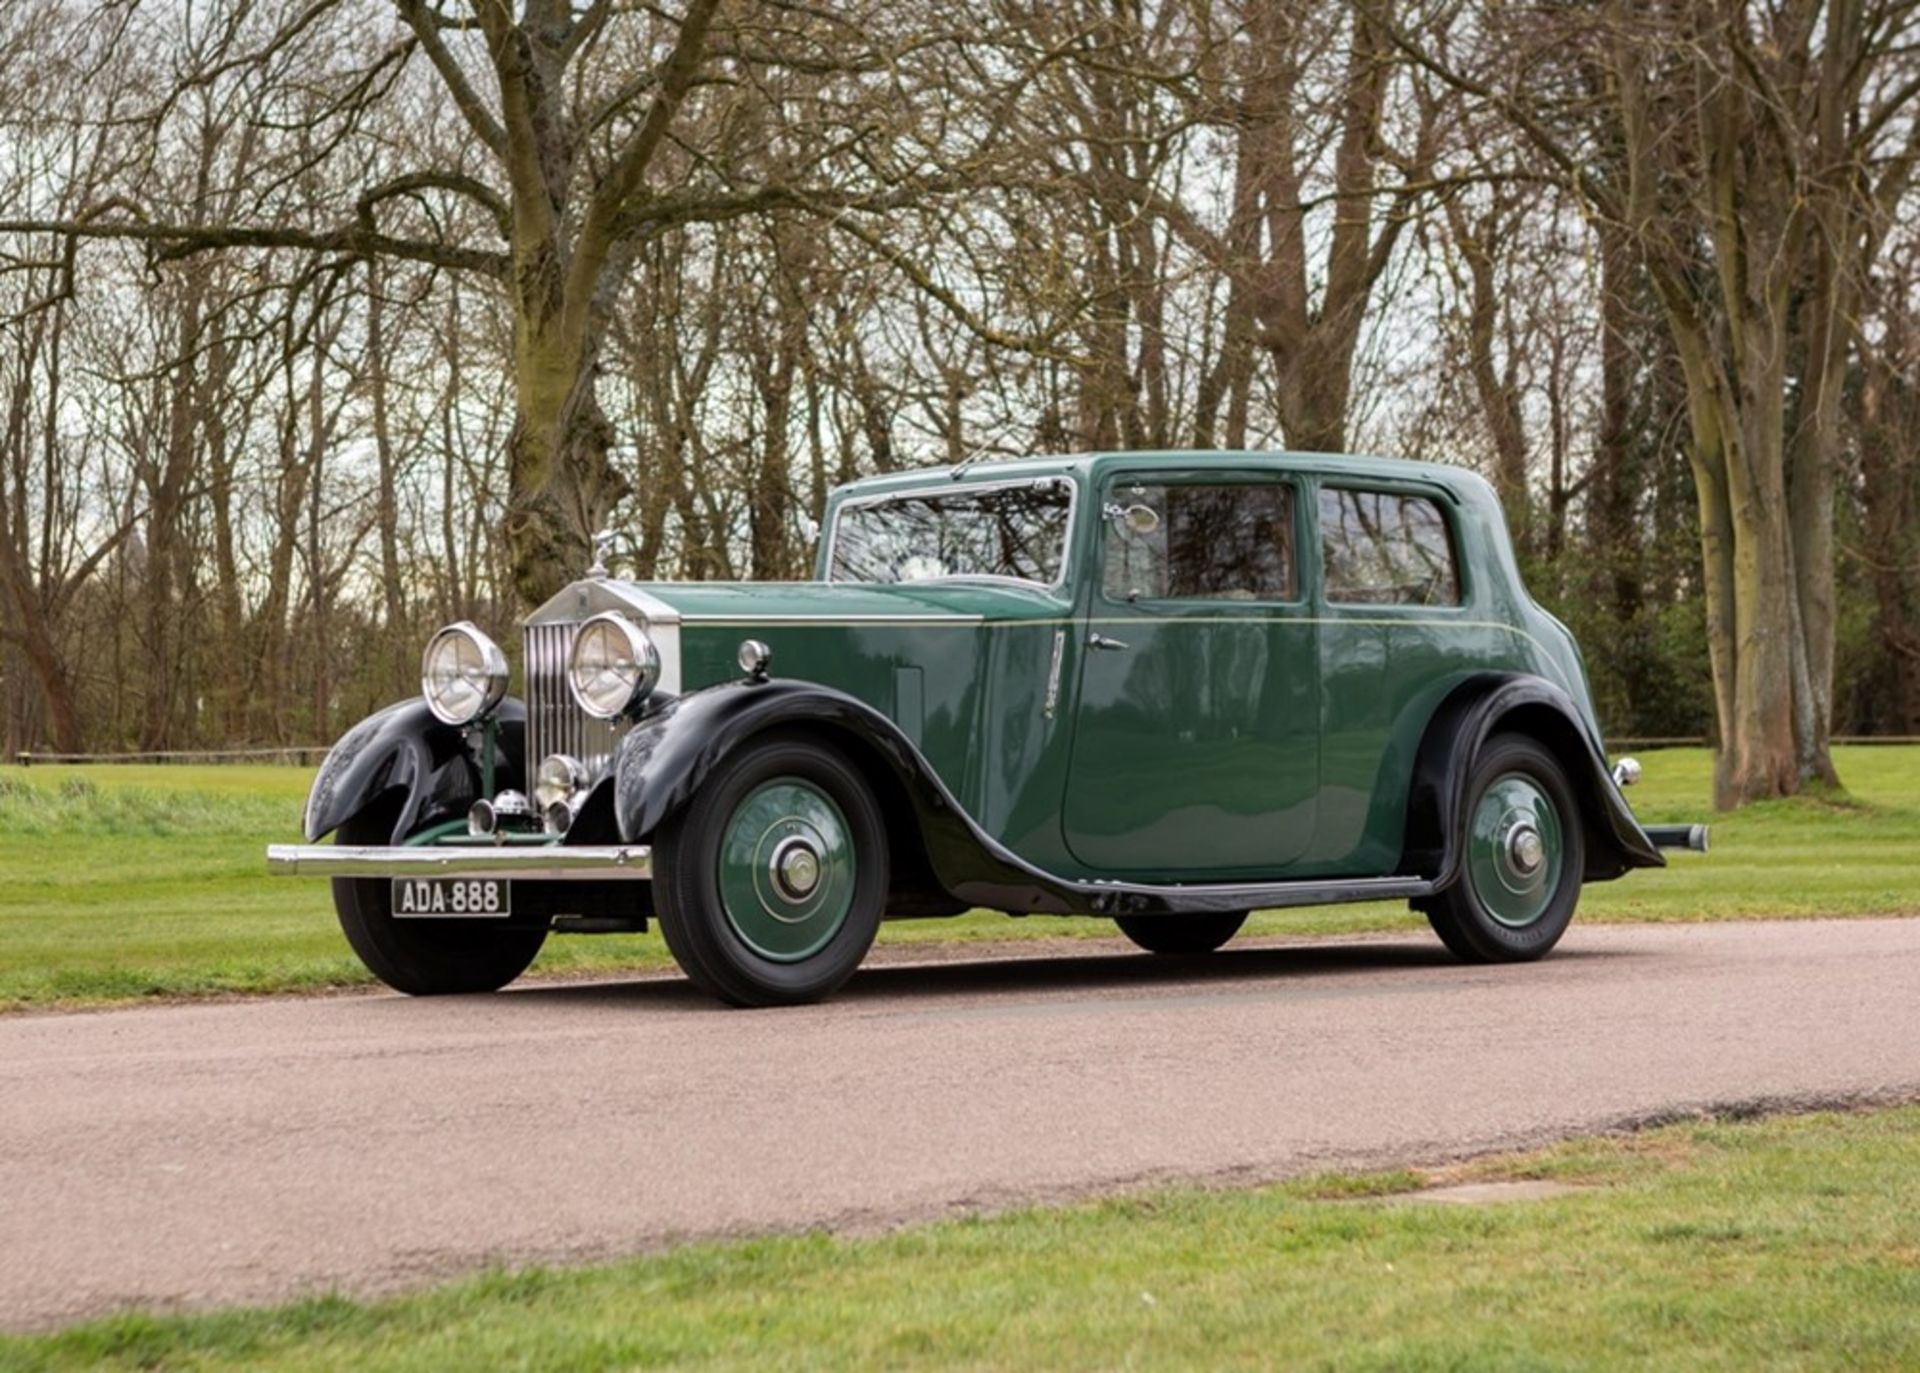 1934 Rolls-Royce 20/25 by Atcherley - Image 3 of 9